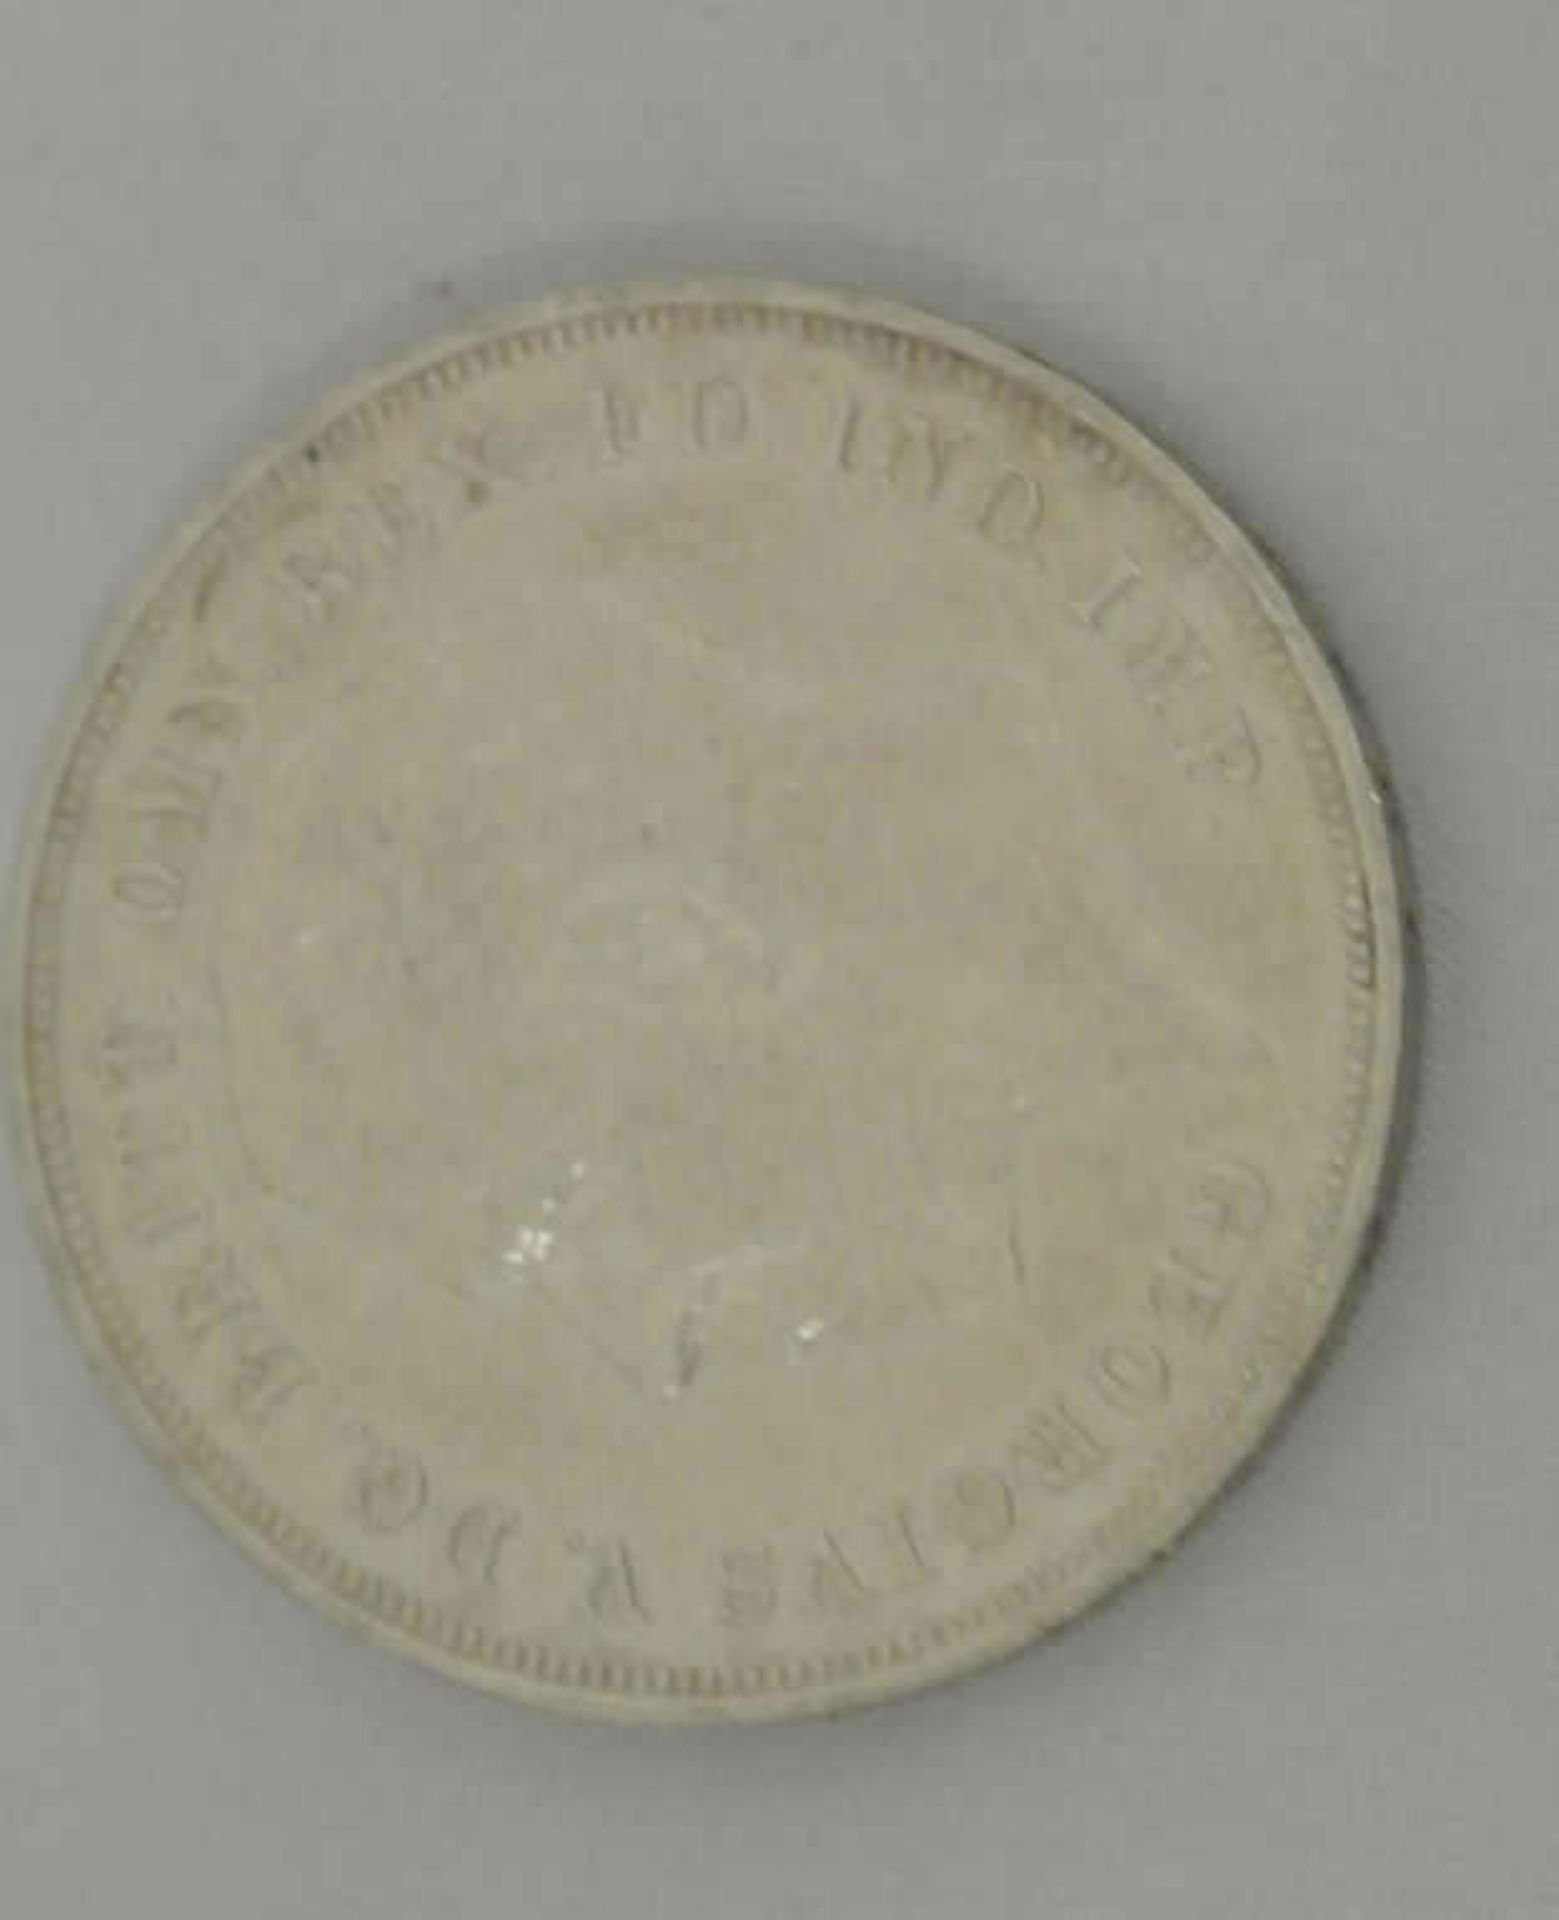 England, 1 Crown 5 Shilling 1935 England, Regierungsjubiläum, Silber, Gewicht ca. 28,2 gr - Bild 2 aus 2